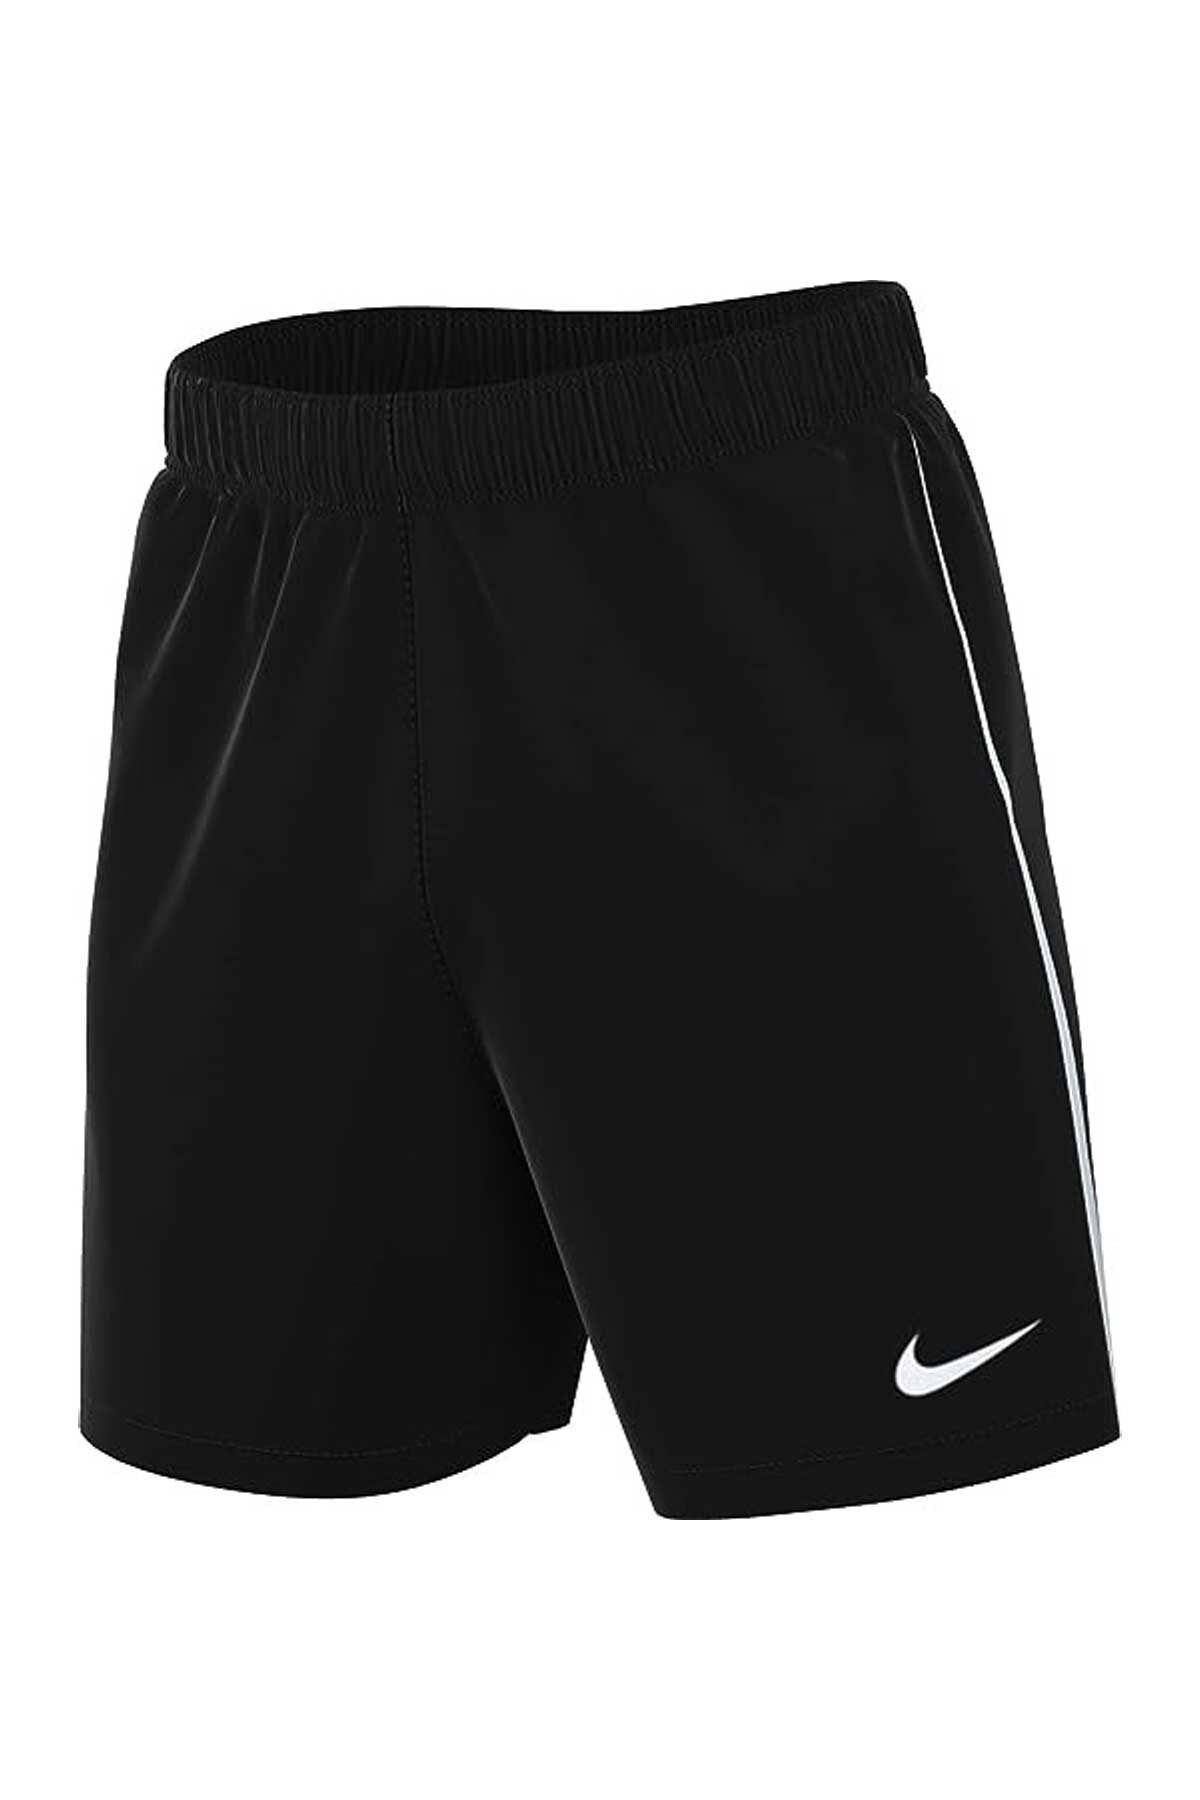 Nike Dri-FIT League III Erkek Şort DR0960-010